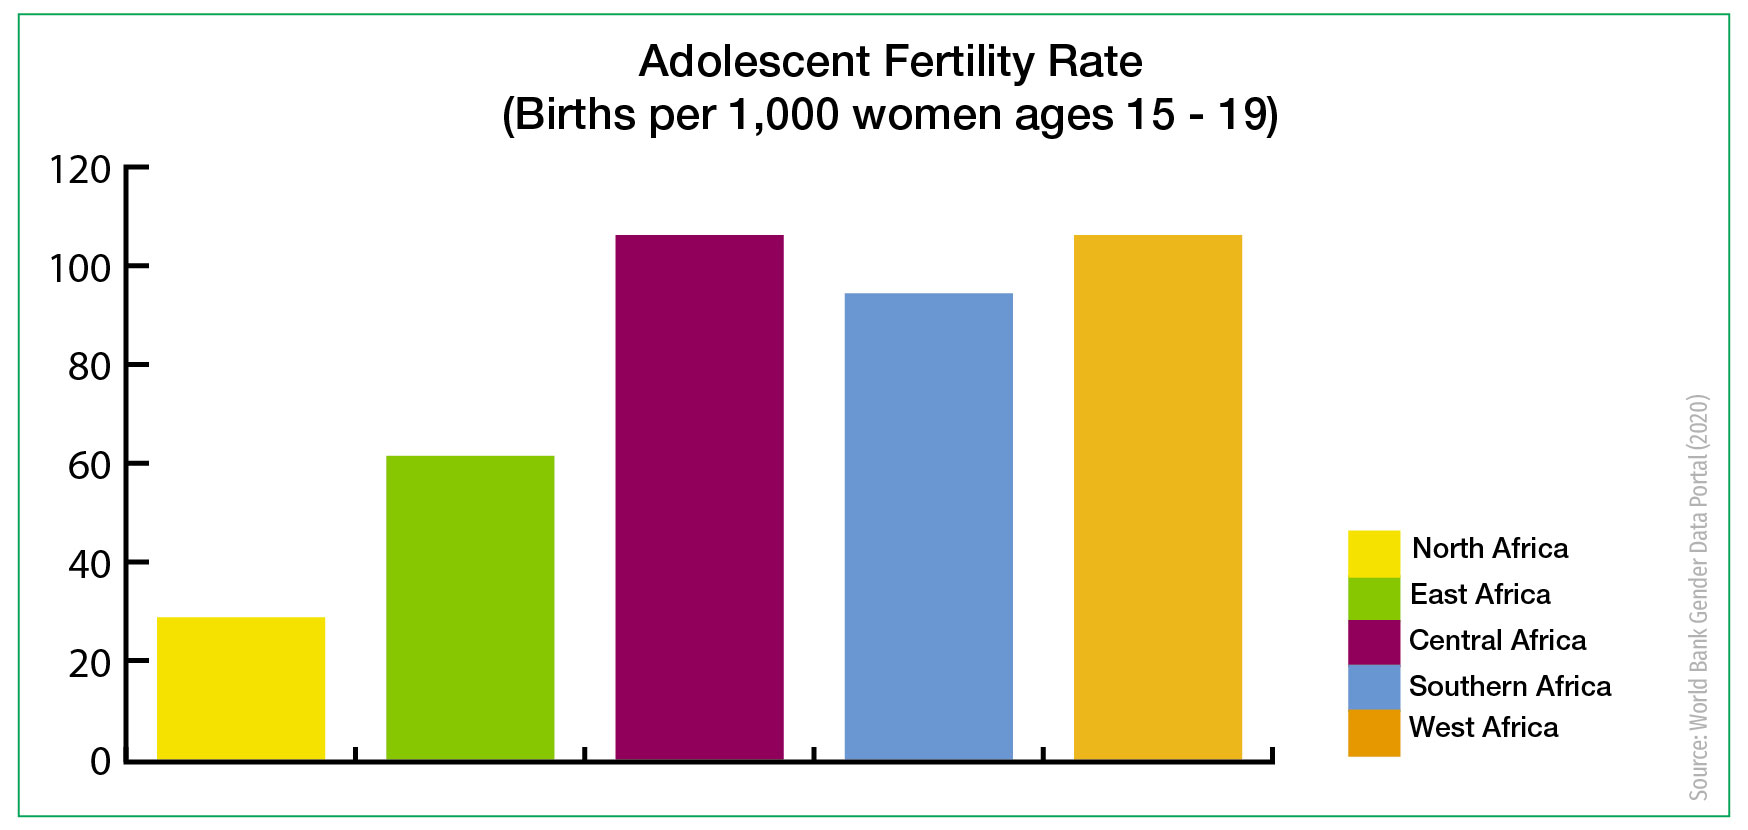 Figure 1: Adolescent fertility rate